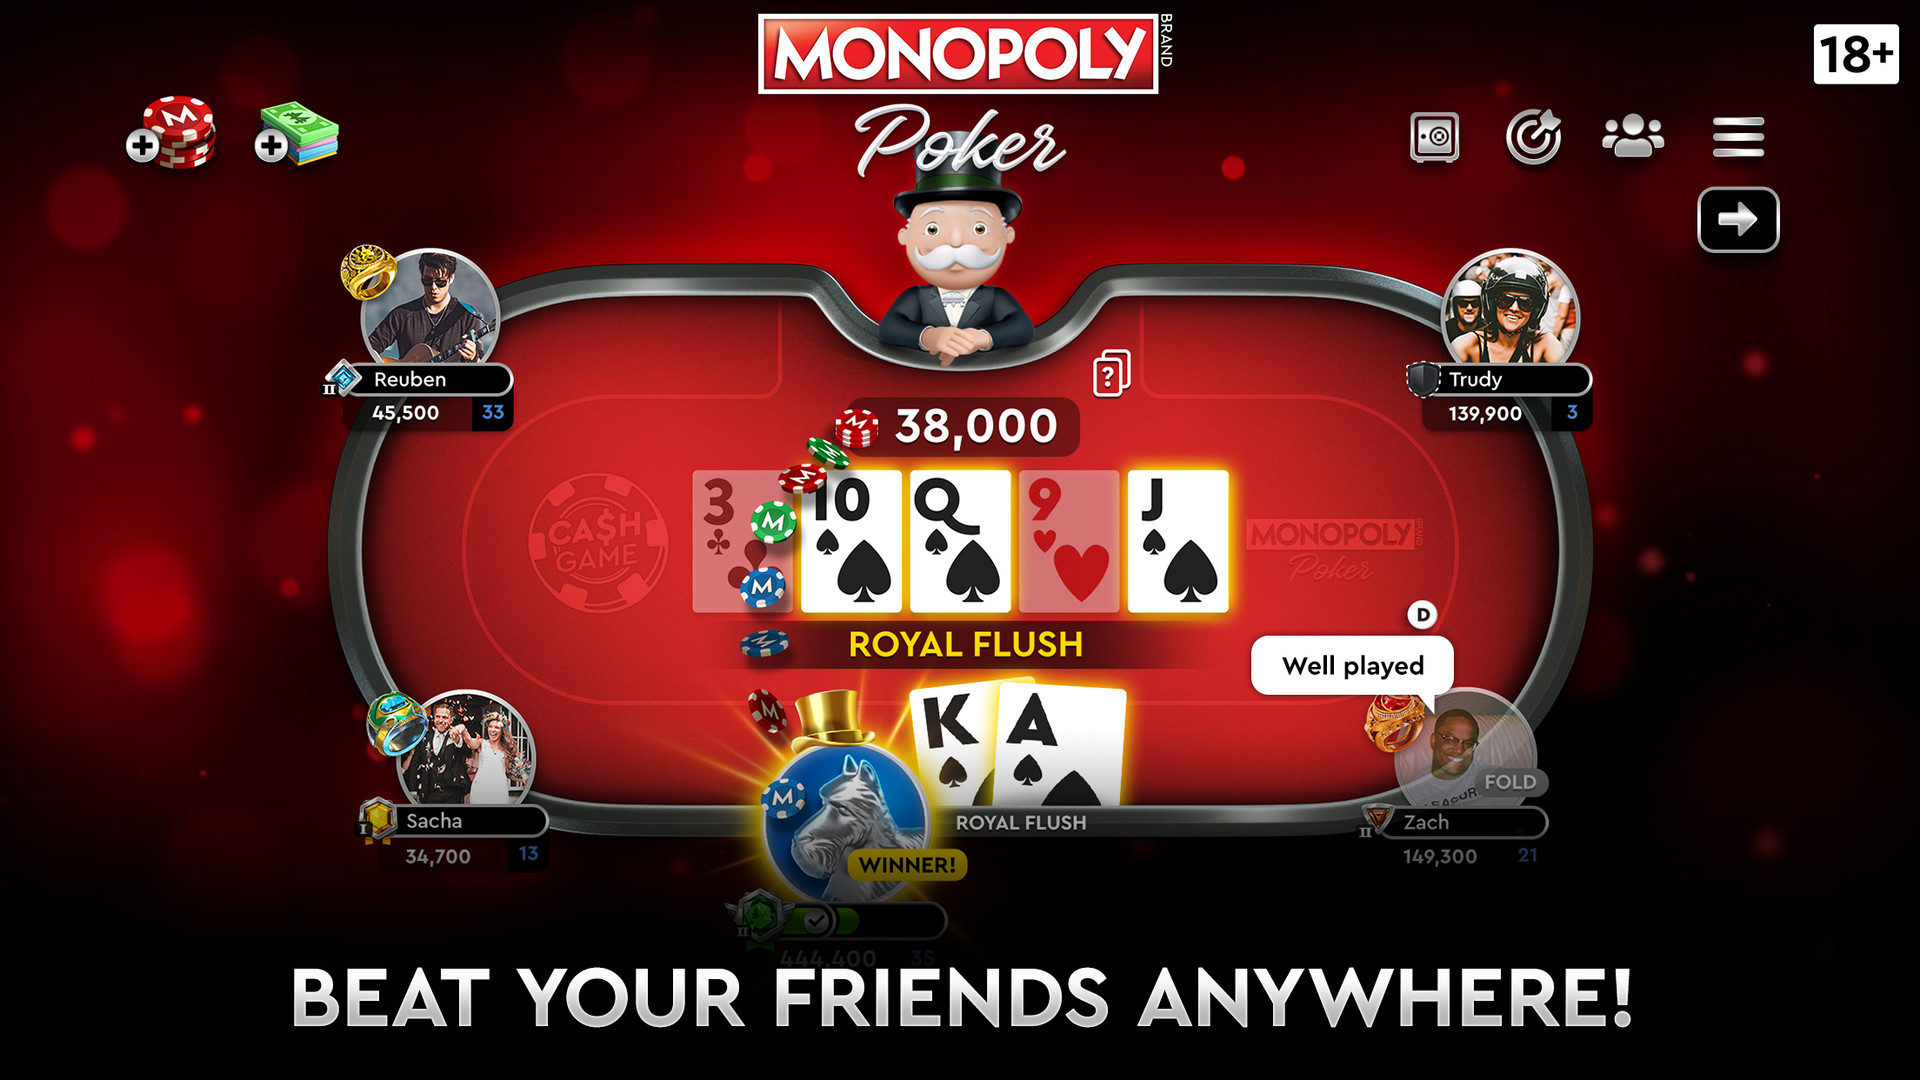 MONOPOLY Poker pe Steam